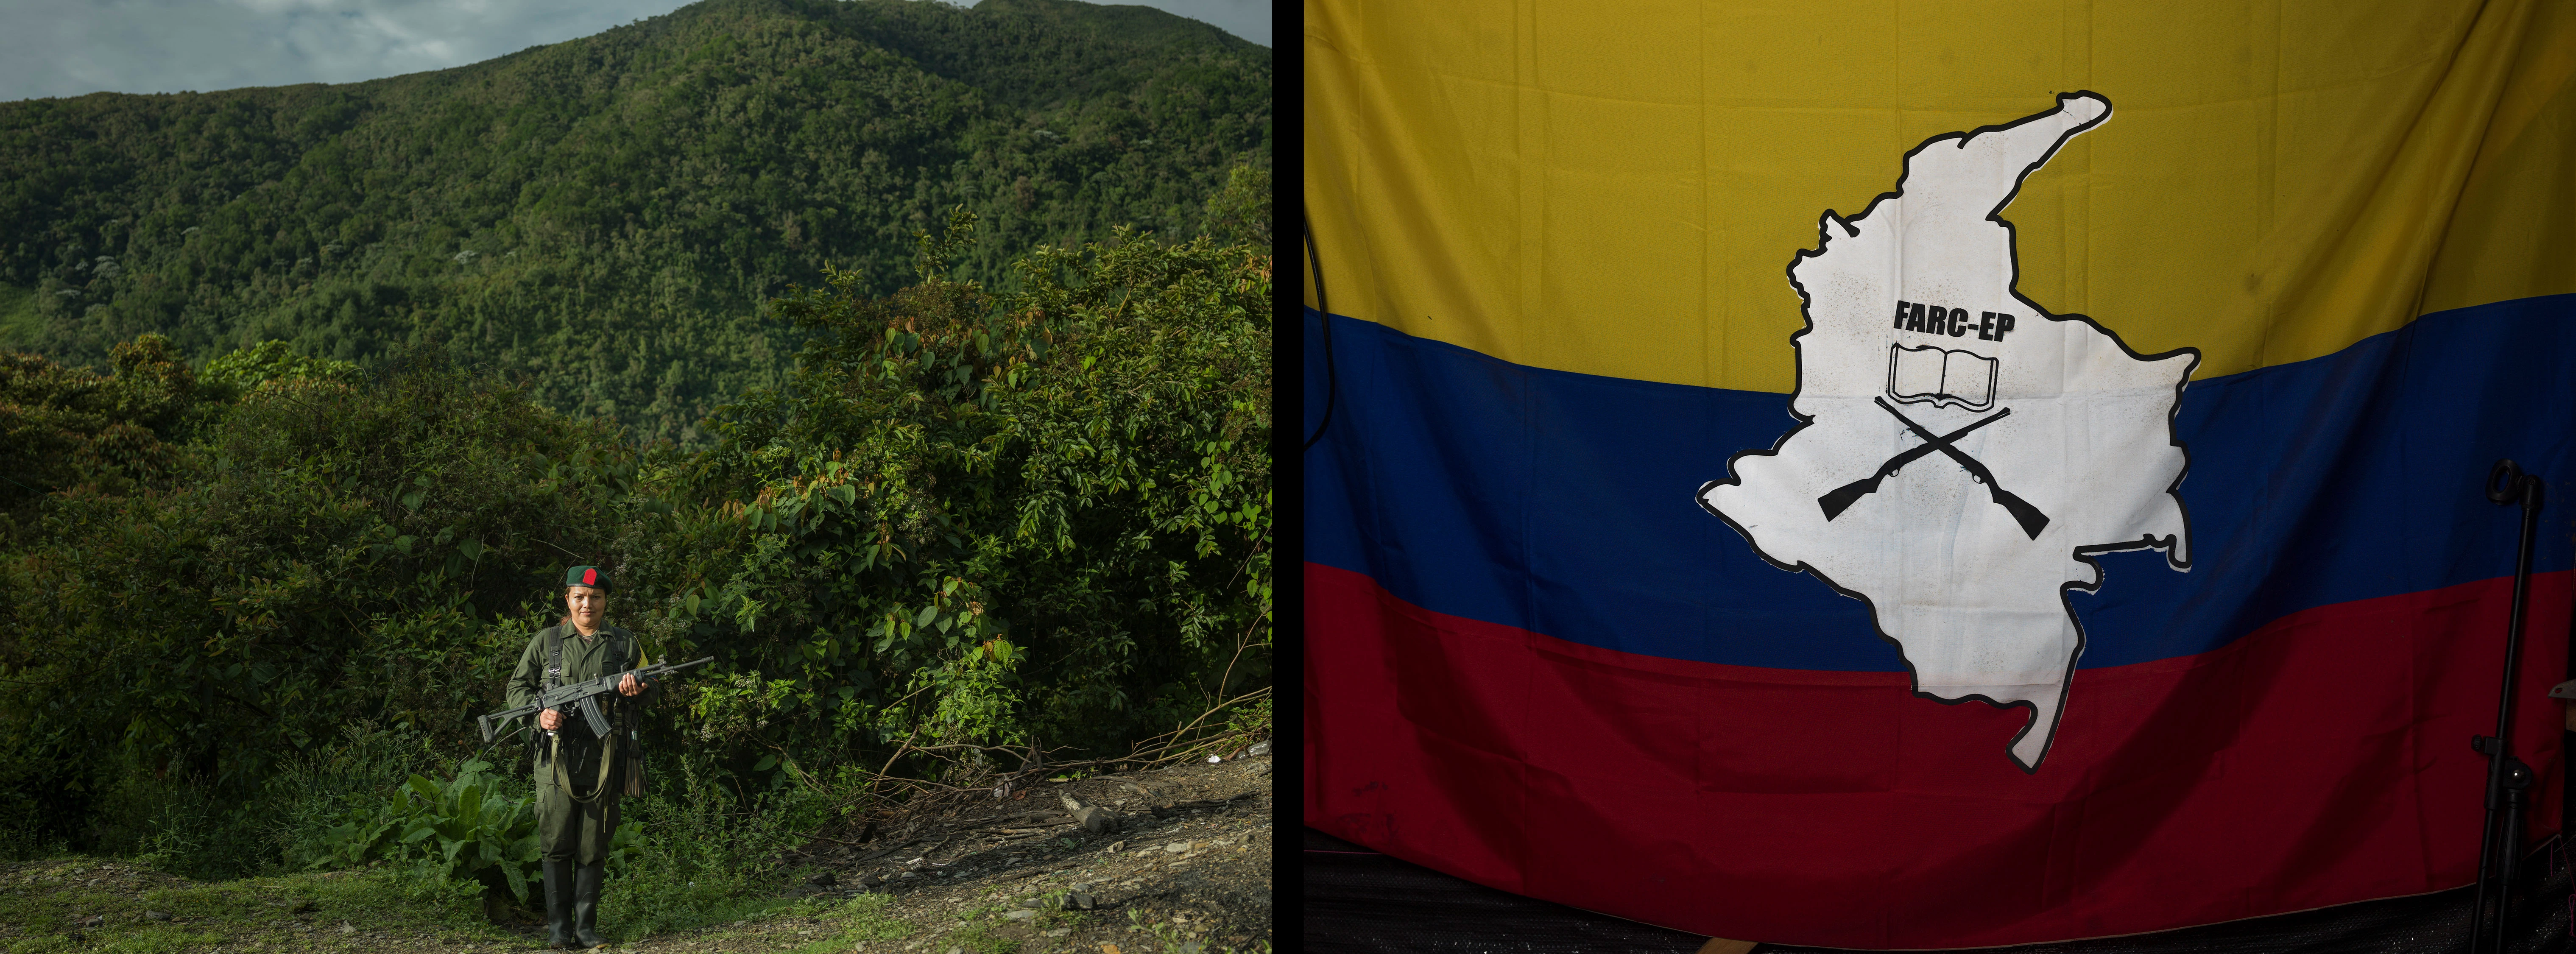 intercept-FARC-colombia-newsha-Tavakolian-magnum-photography-31-b-1490294678